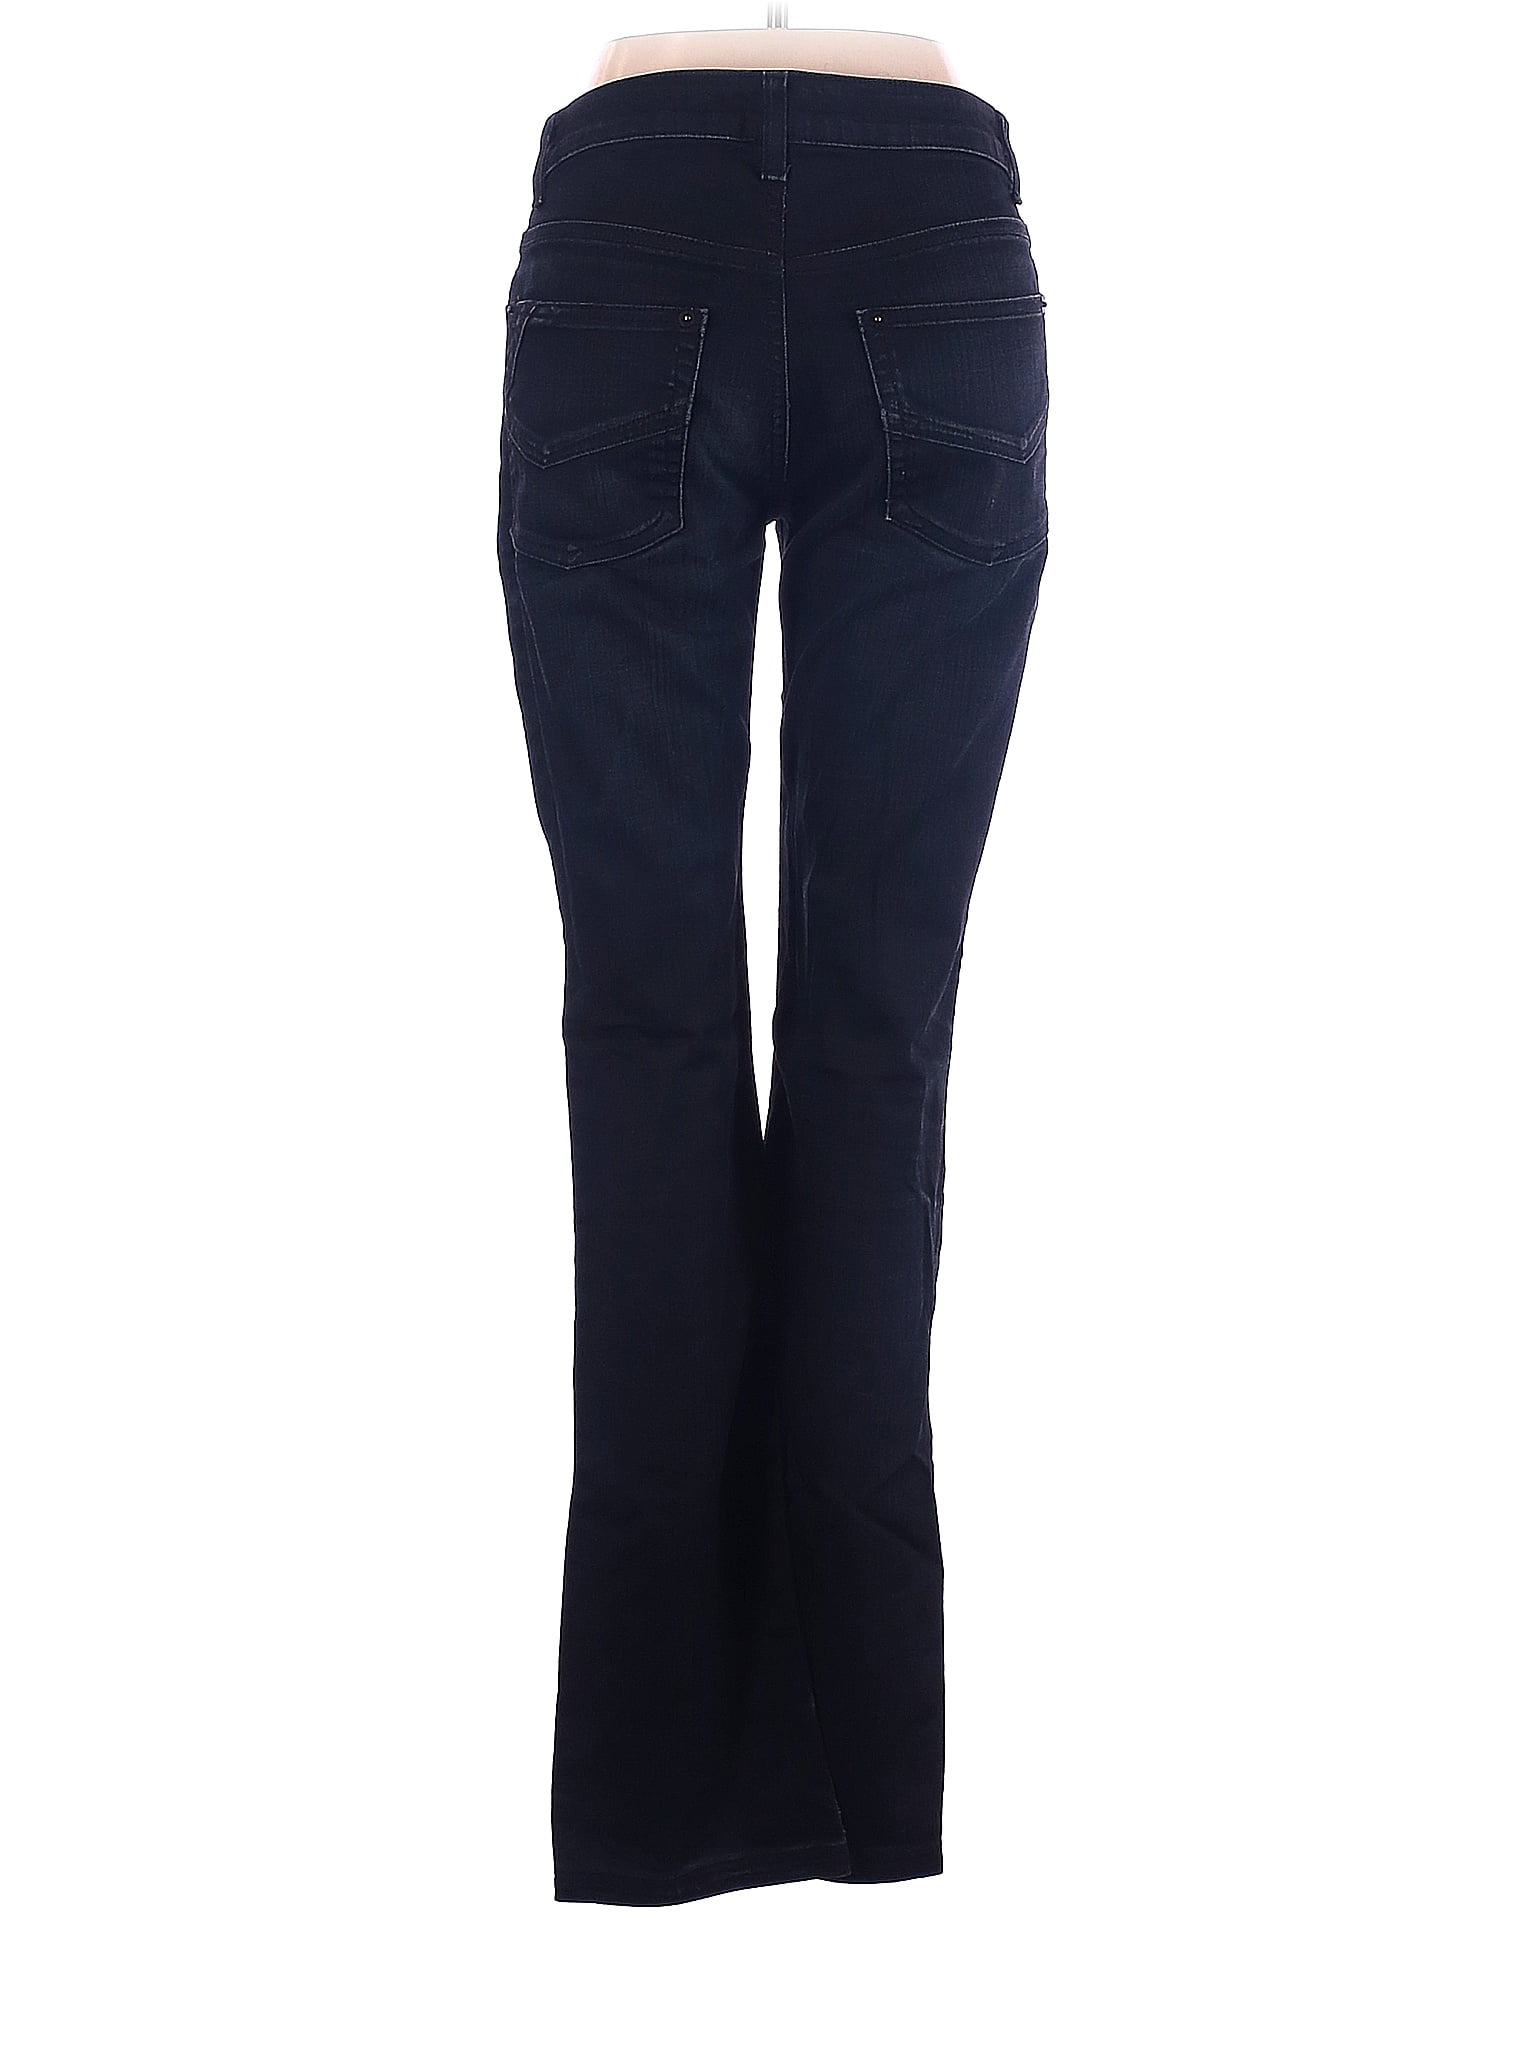 Pre-Owned Zadig & Voltaire Women's Size 38 Jeans - Walmart.com